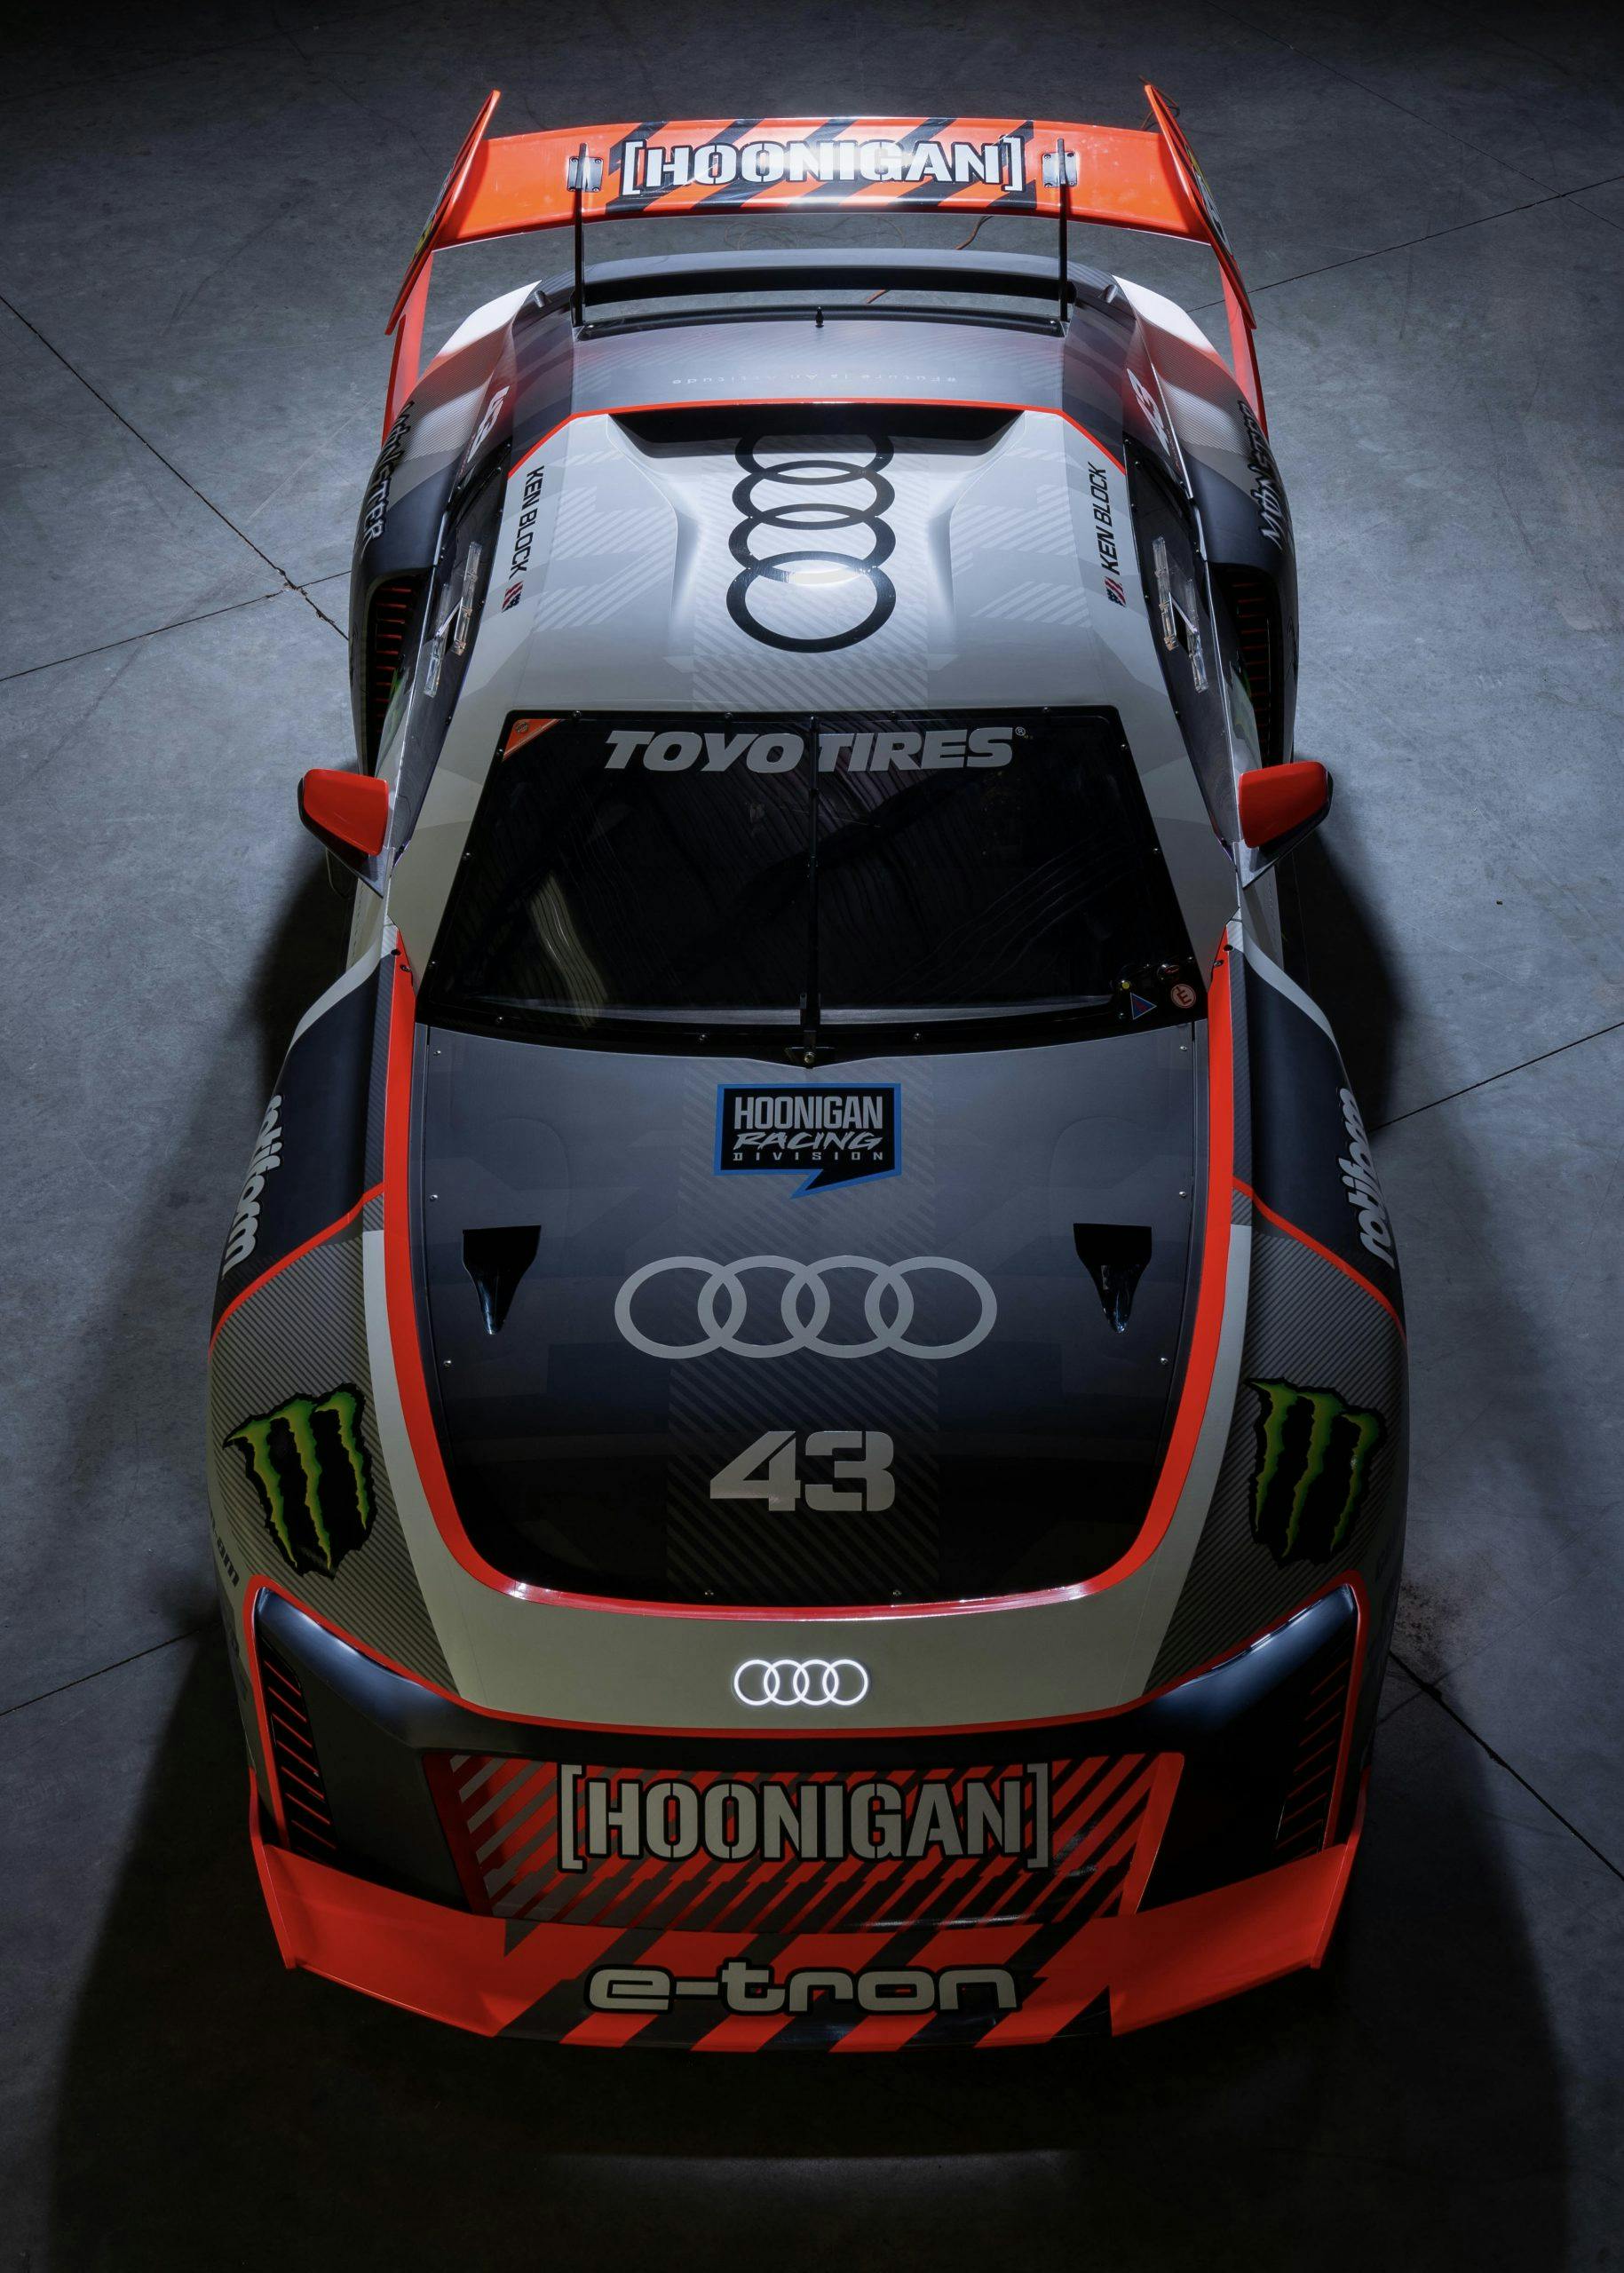 Audi S1 Hoonitron exterior high front end